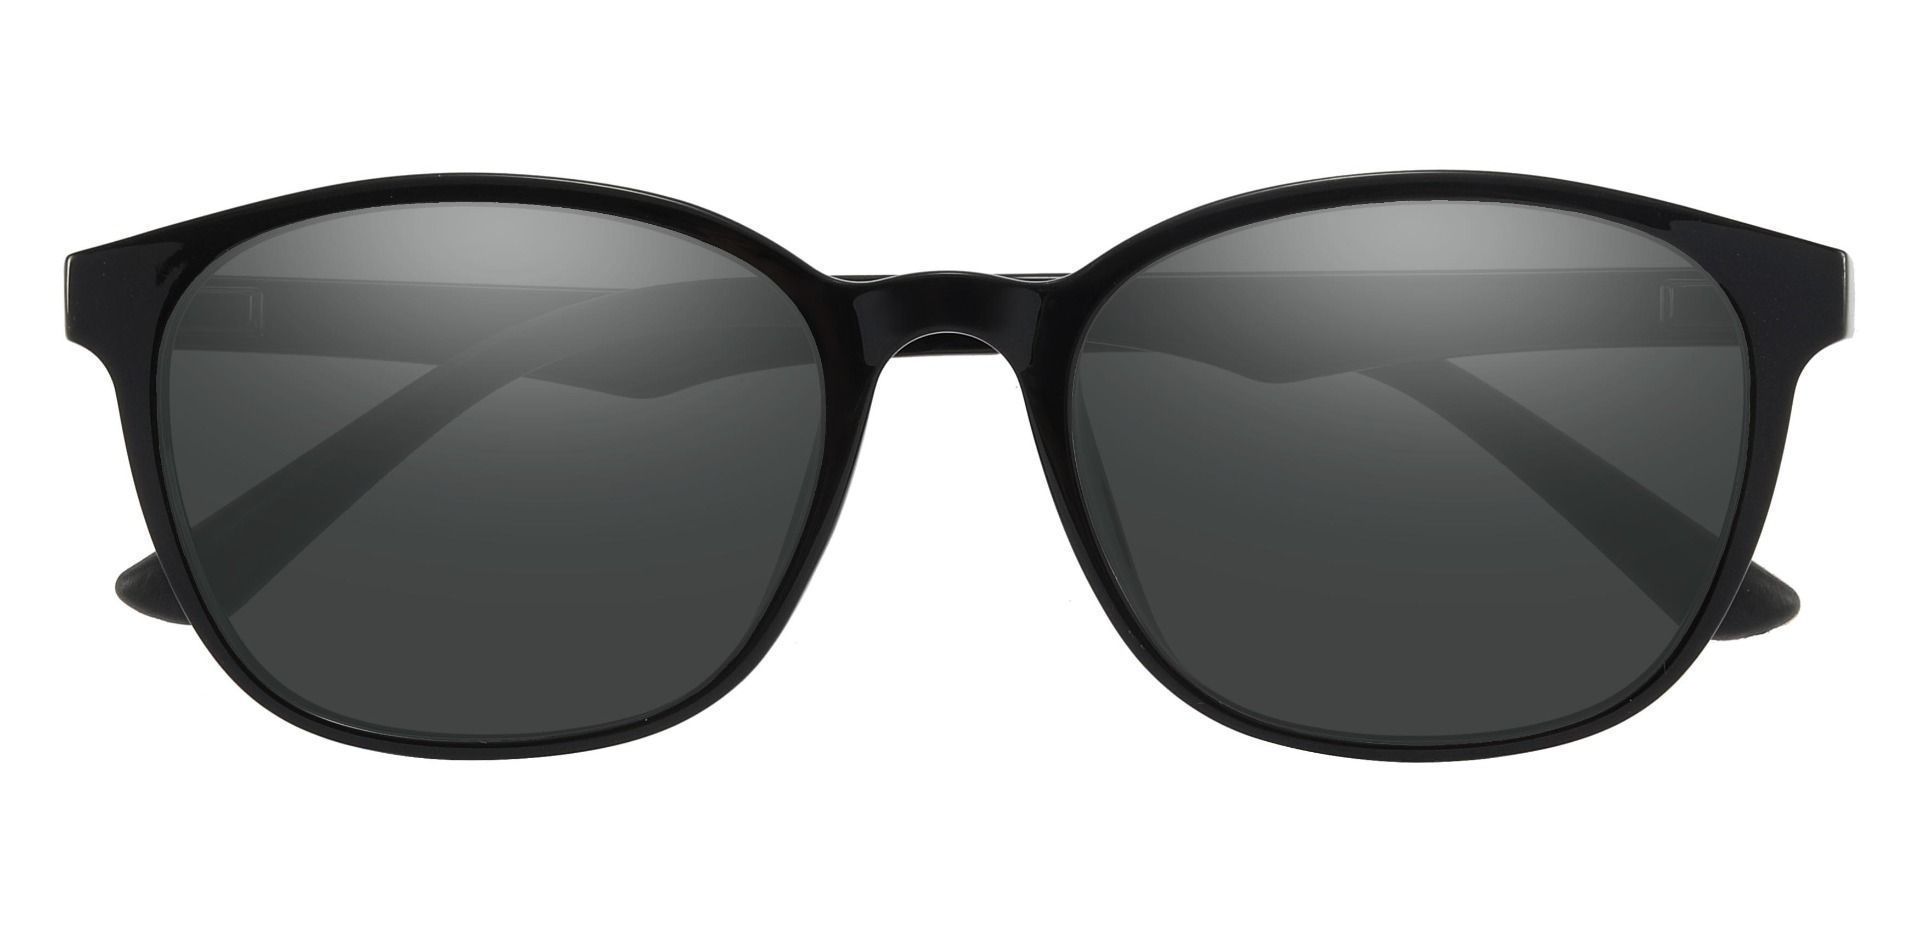 Ursula Oval Reading Sunglasses - Black Frame With Gray Lenses